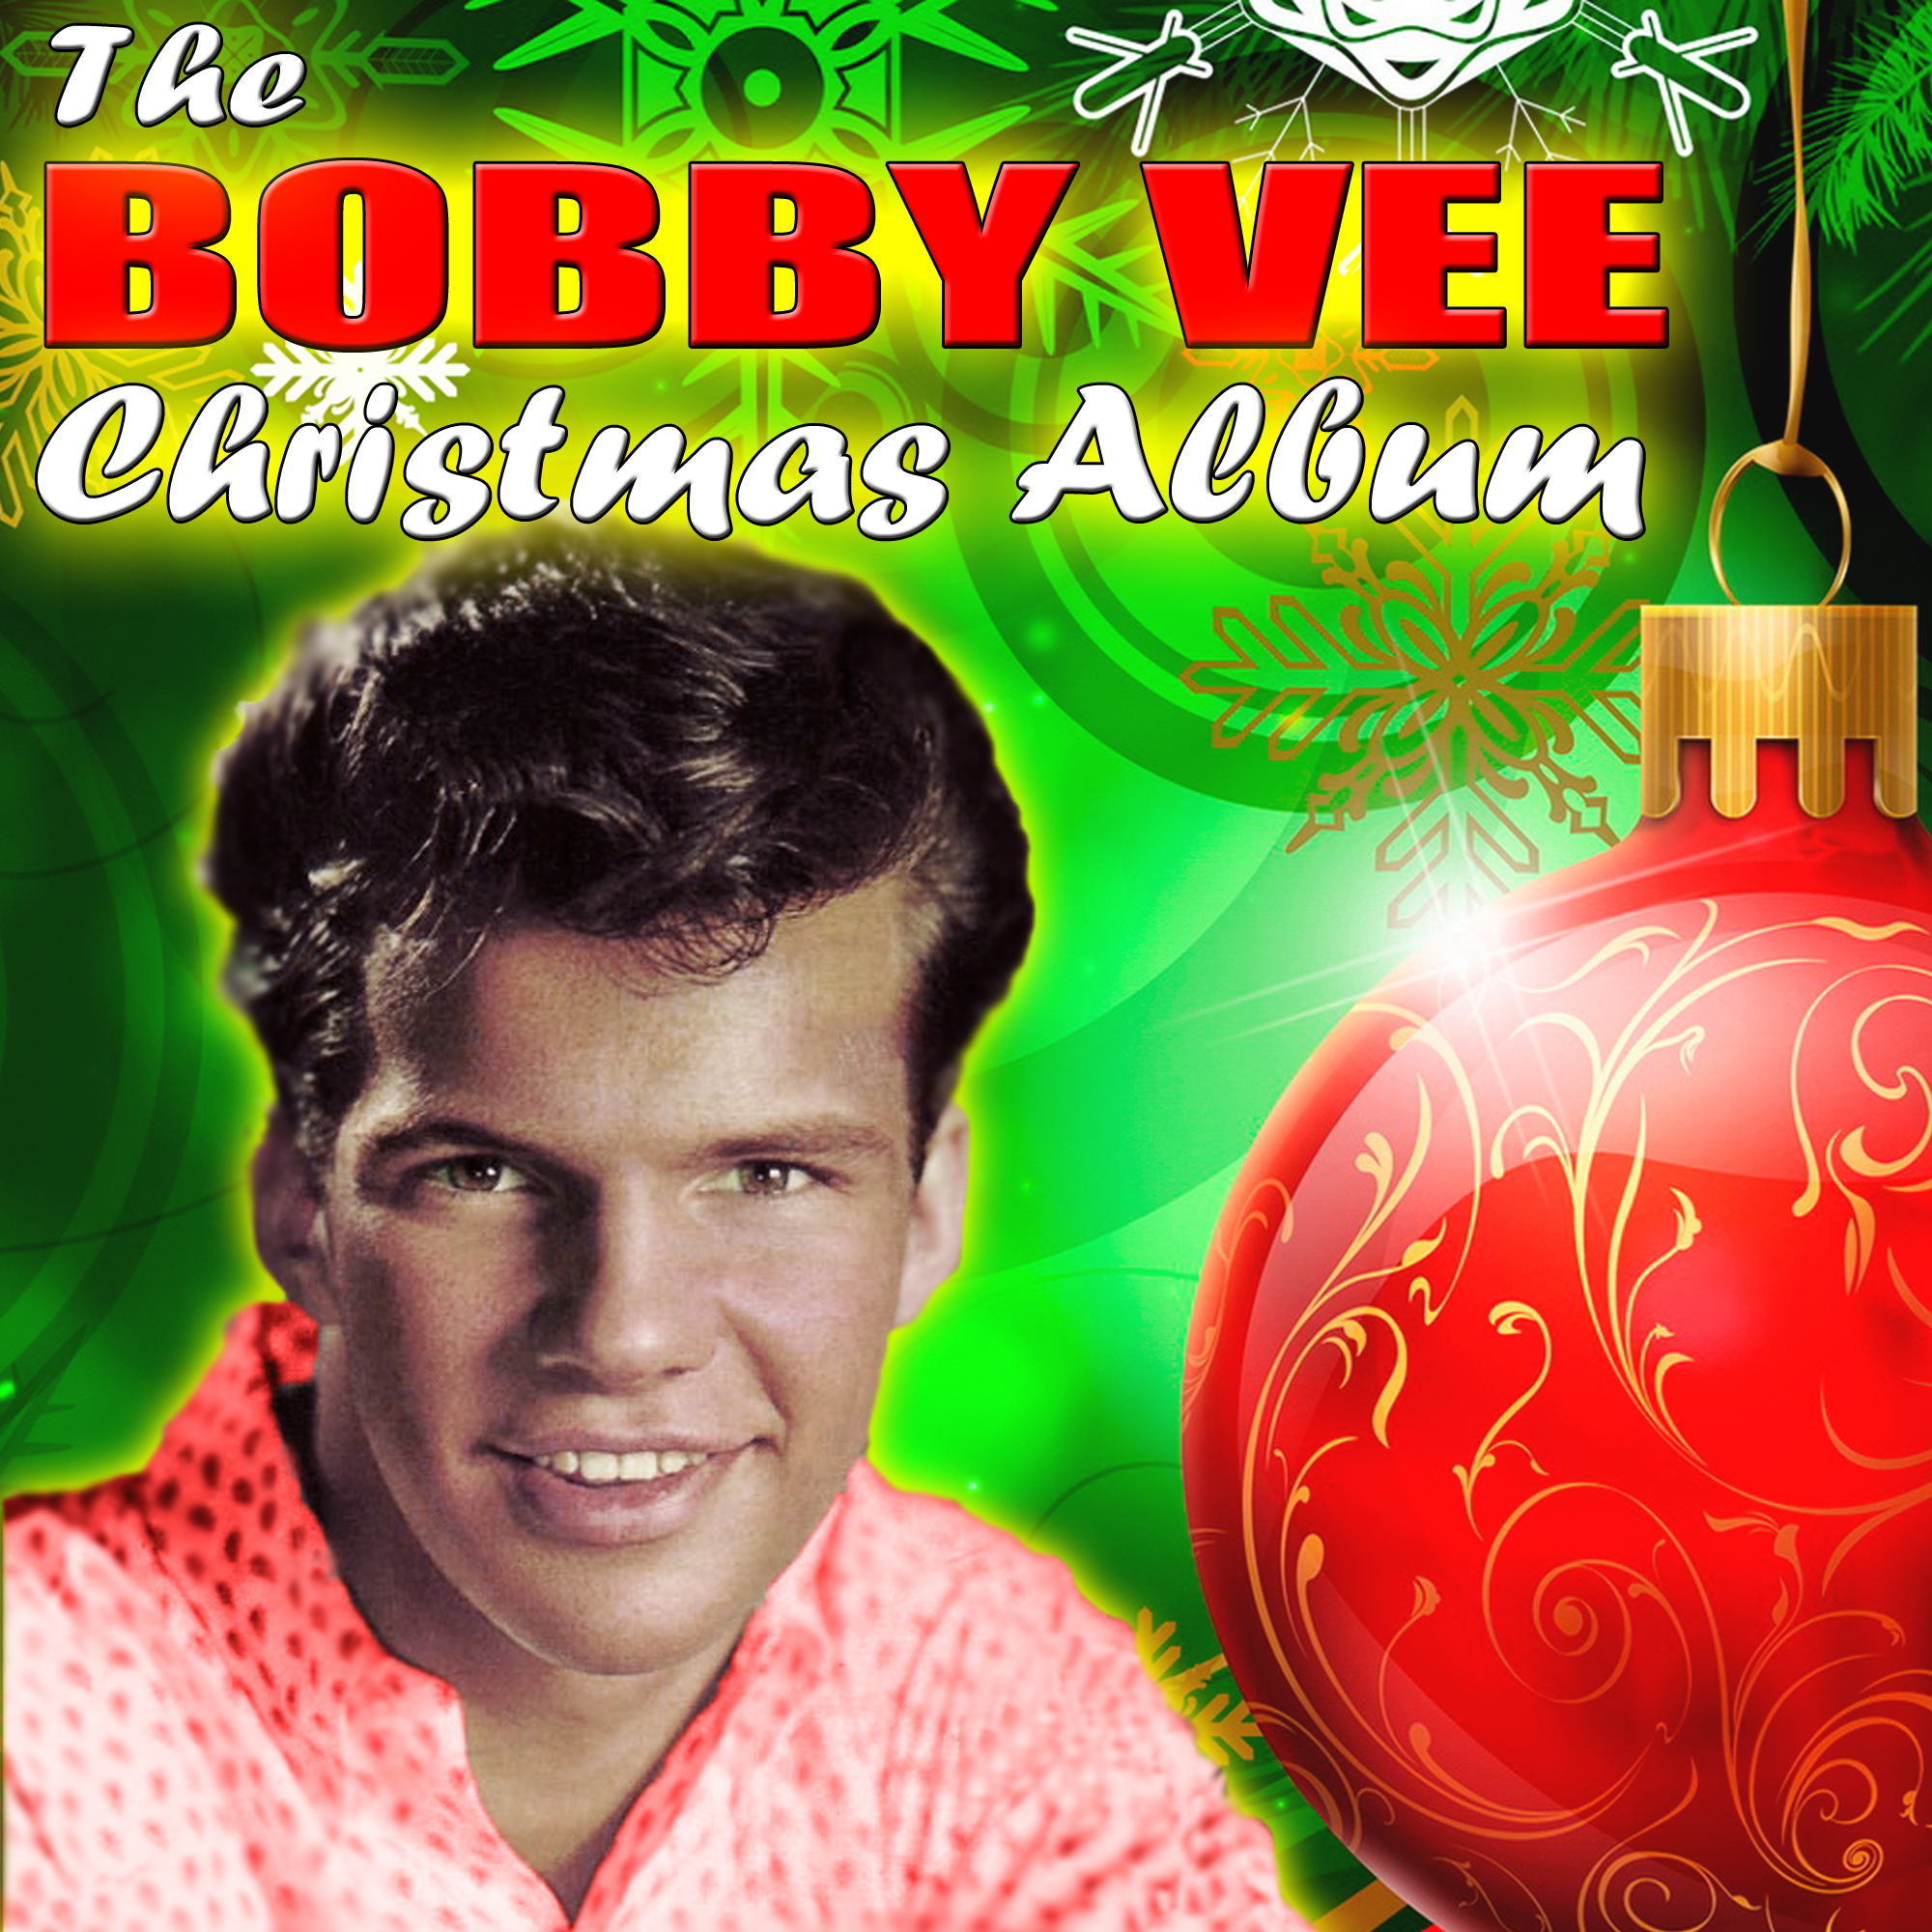 The Bobby Vee Christmas Album